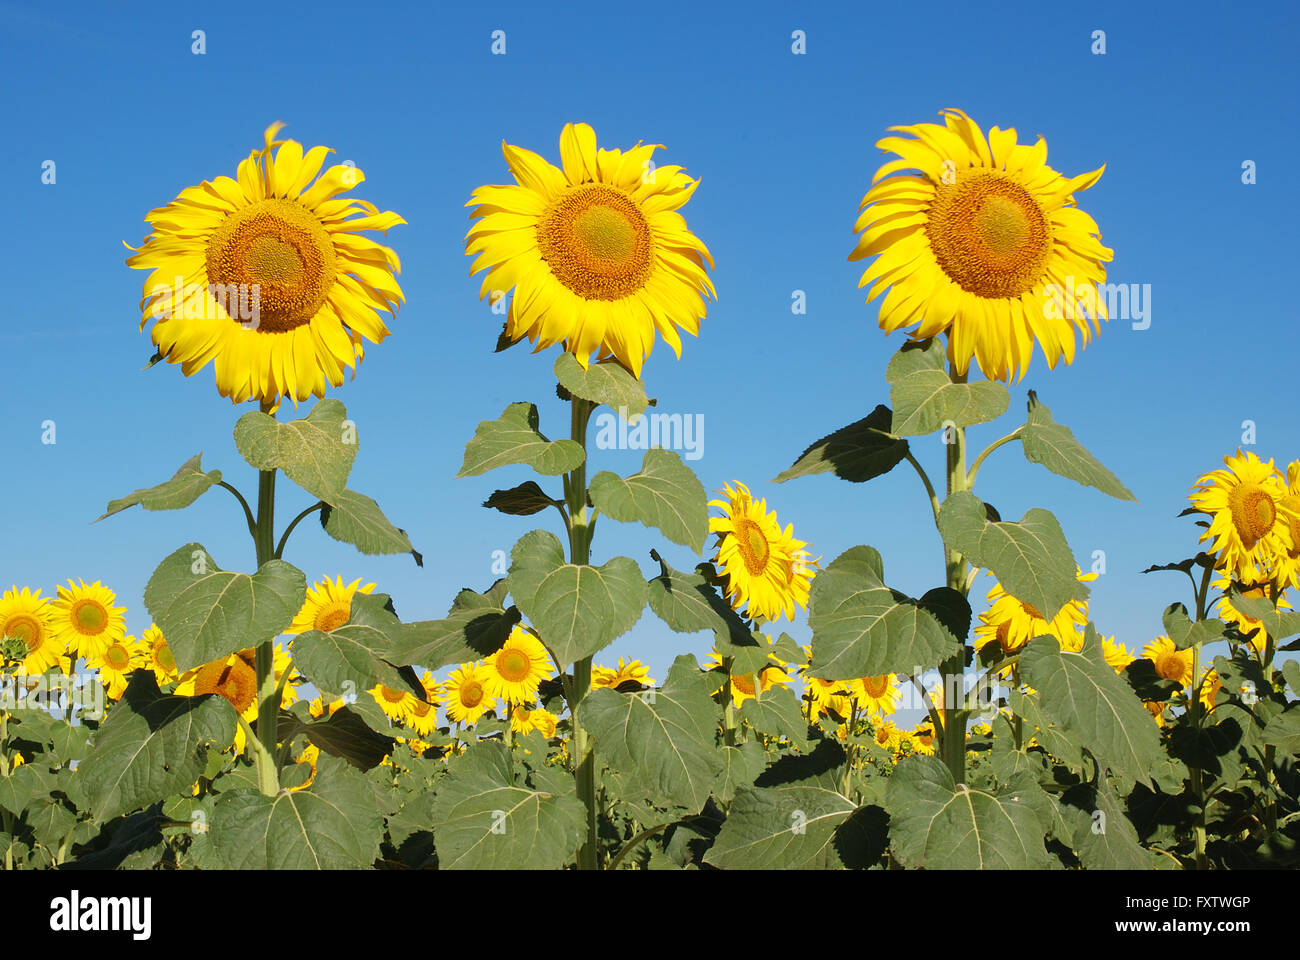 Three sunflowers against blue sky. Stock Photo